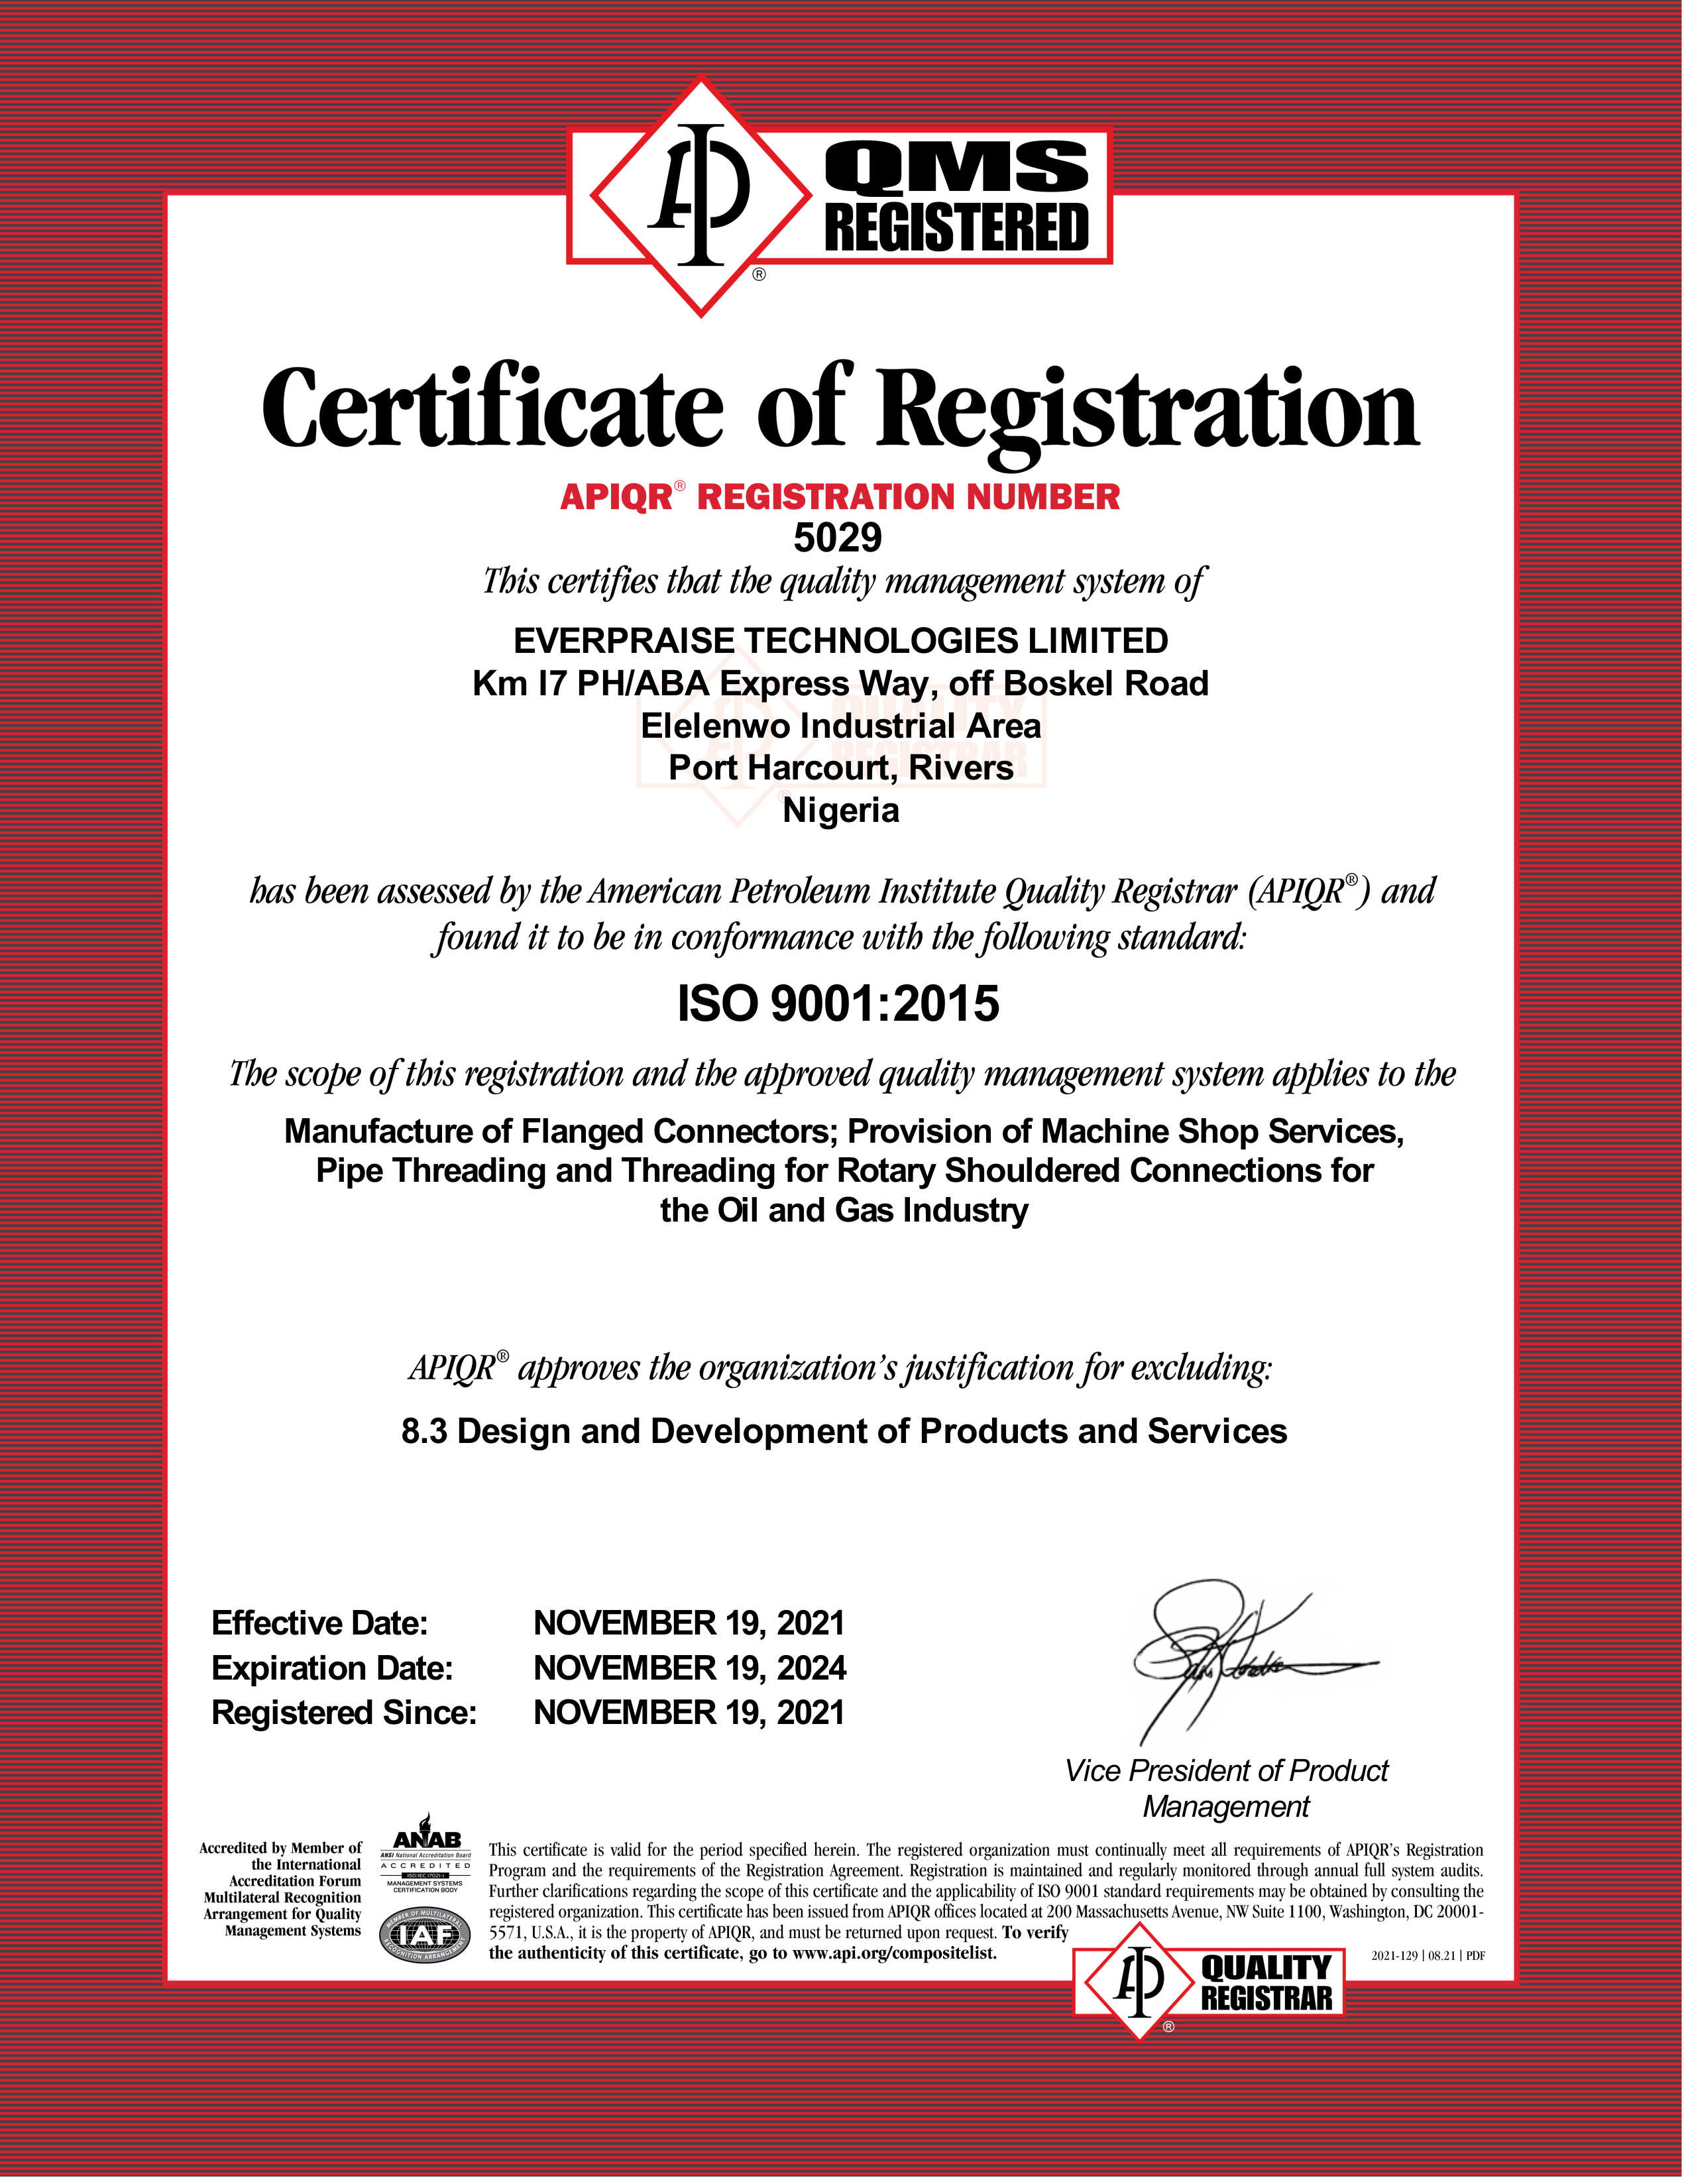 Everpraise ISO 9001:2015